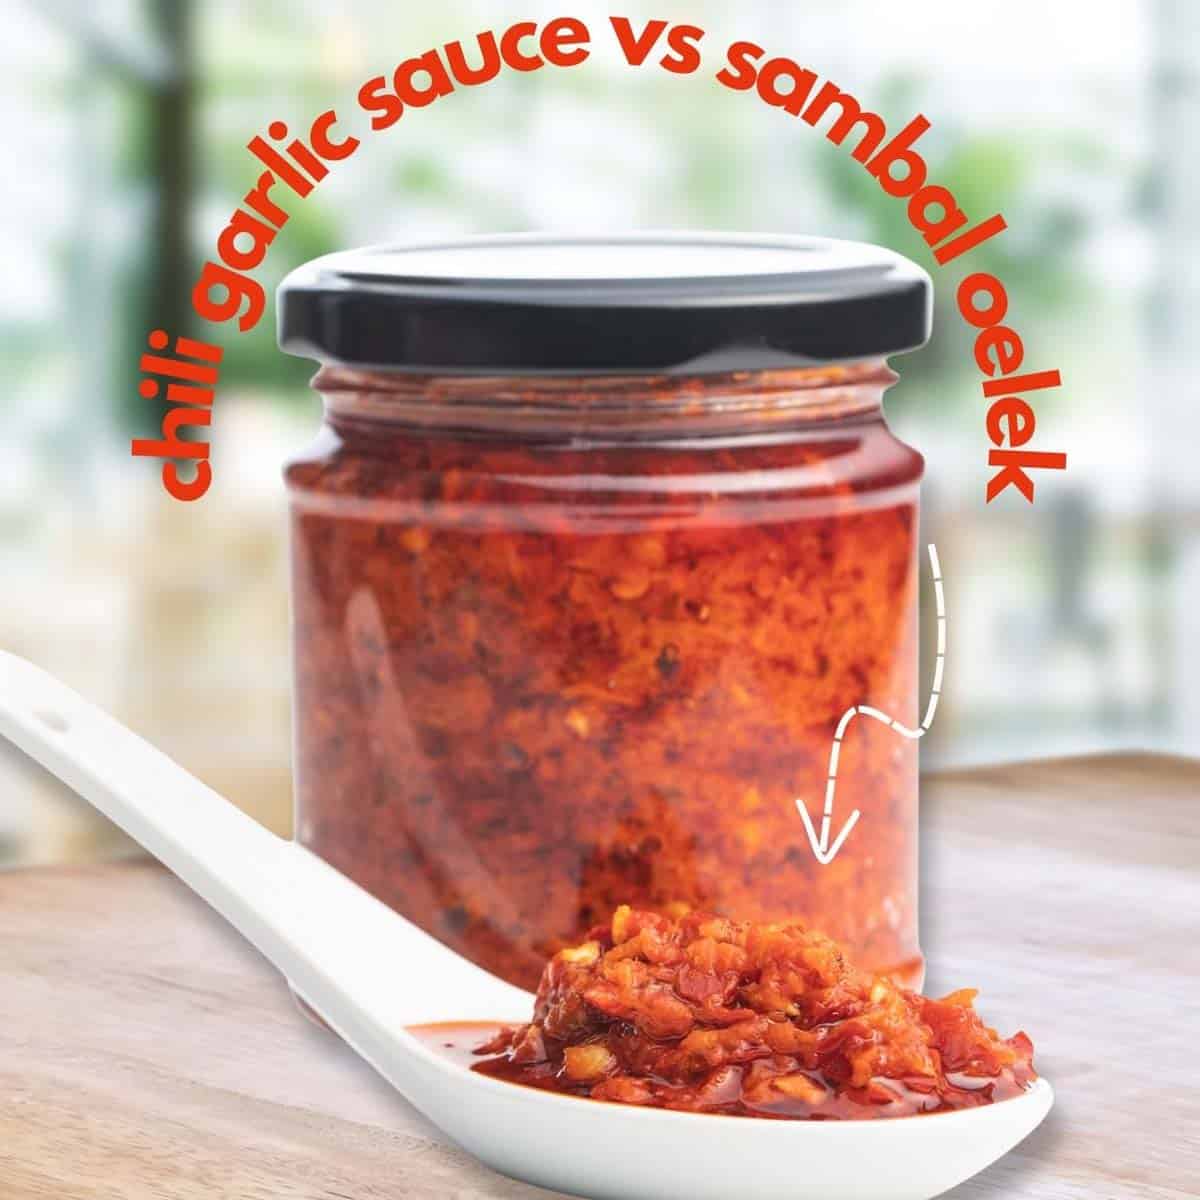 Comparison image of Sambal Oelek and Chili Garlic Sauce